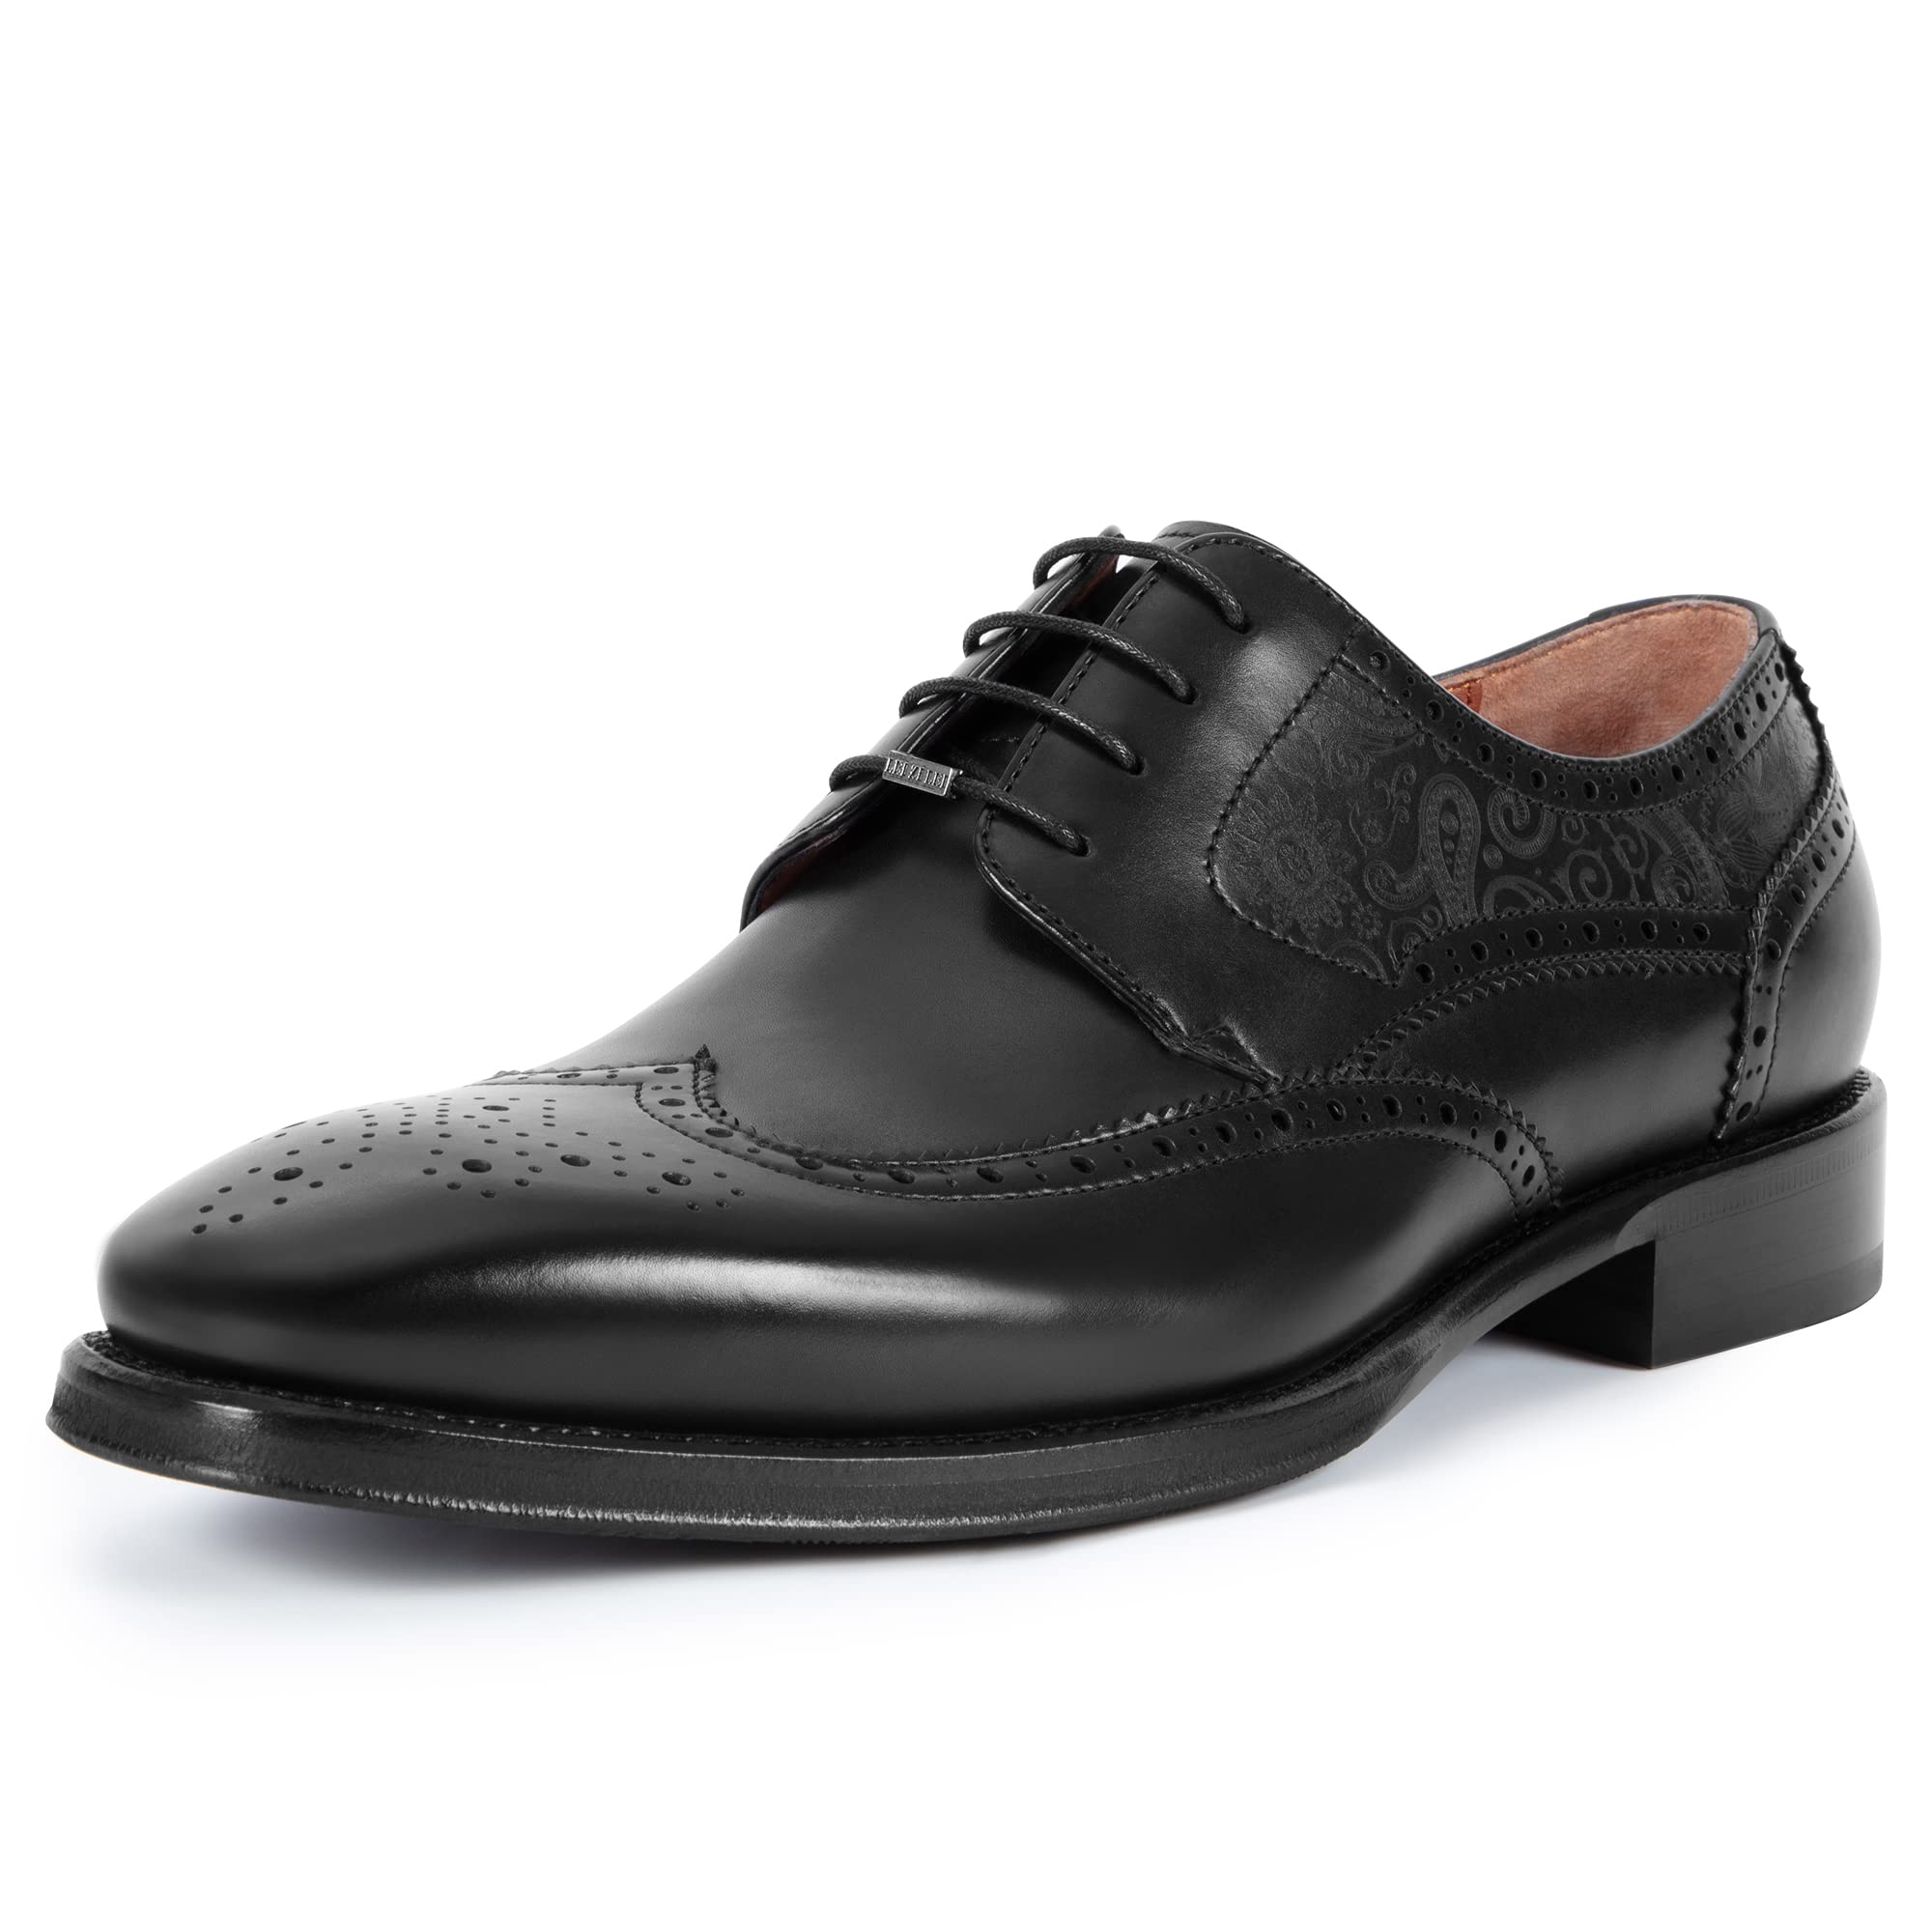 Men's Dress Oxfords Shoes Brogue Genuine Leather Lace-Up Oxford Derby Shoes